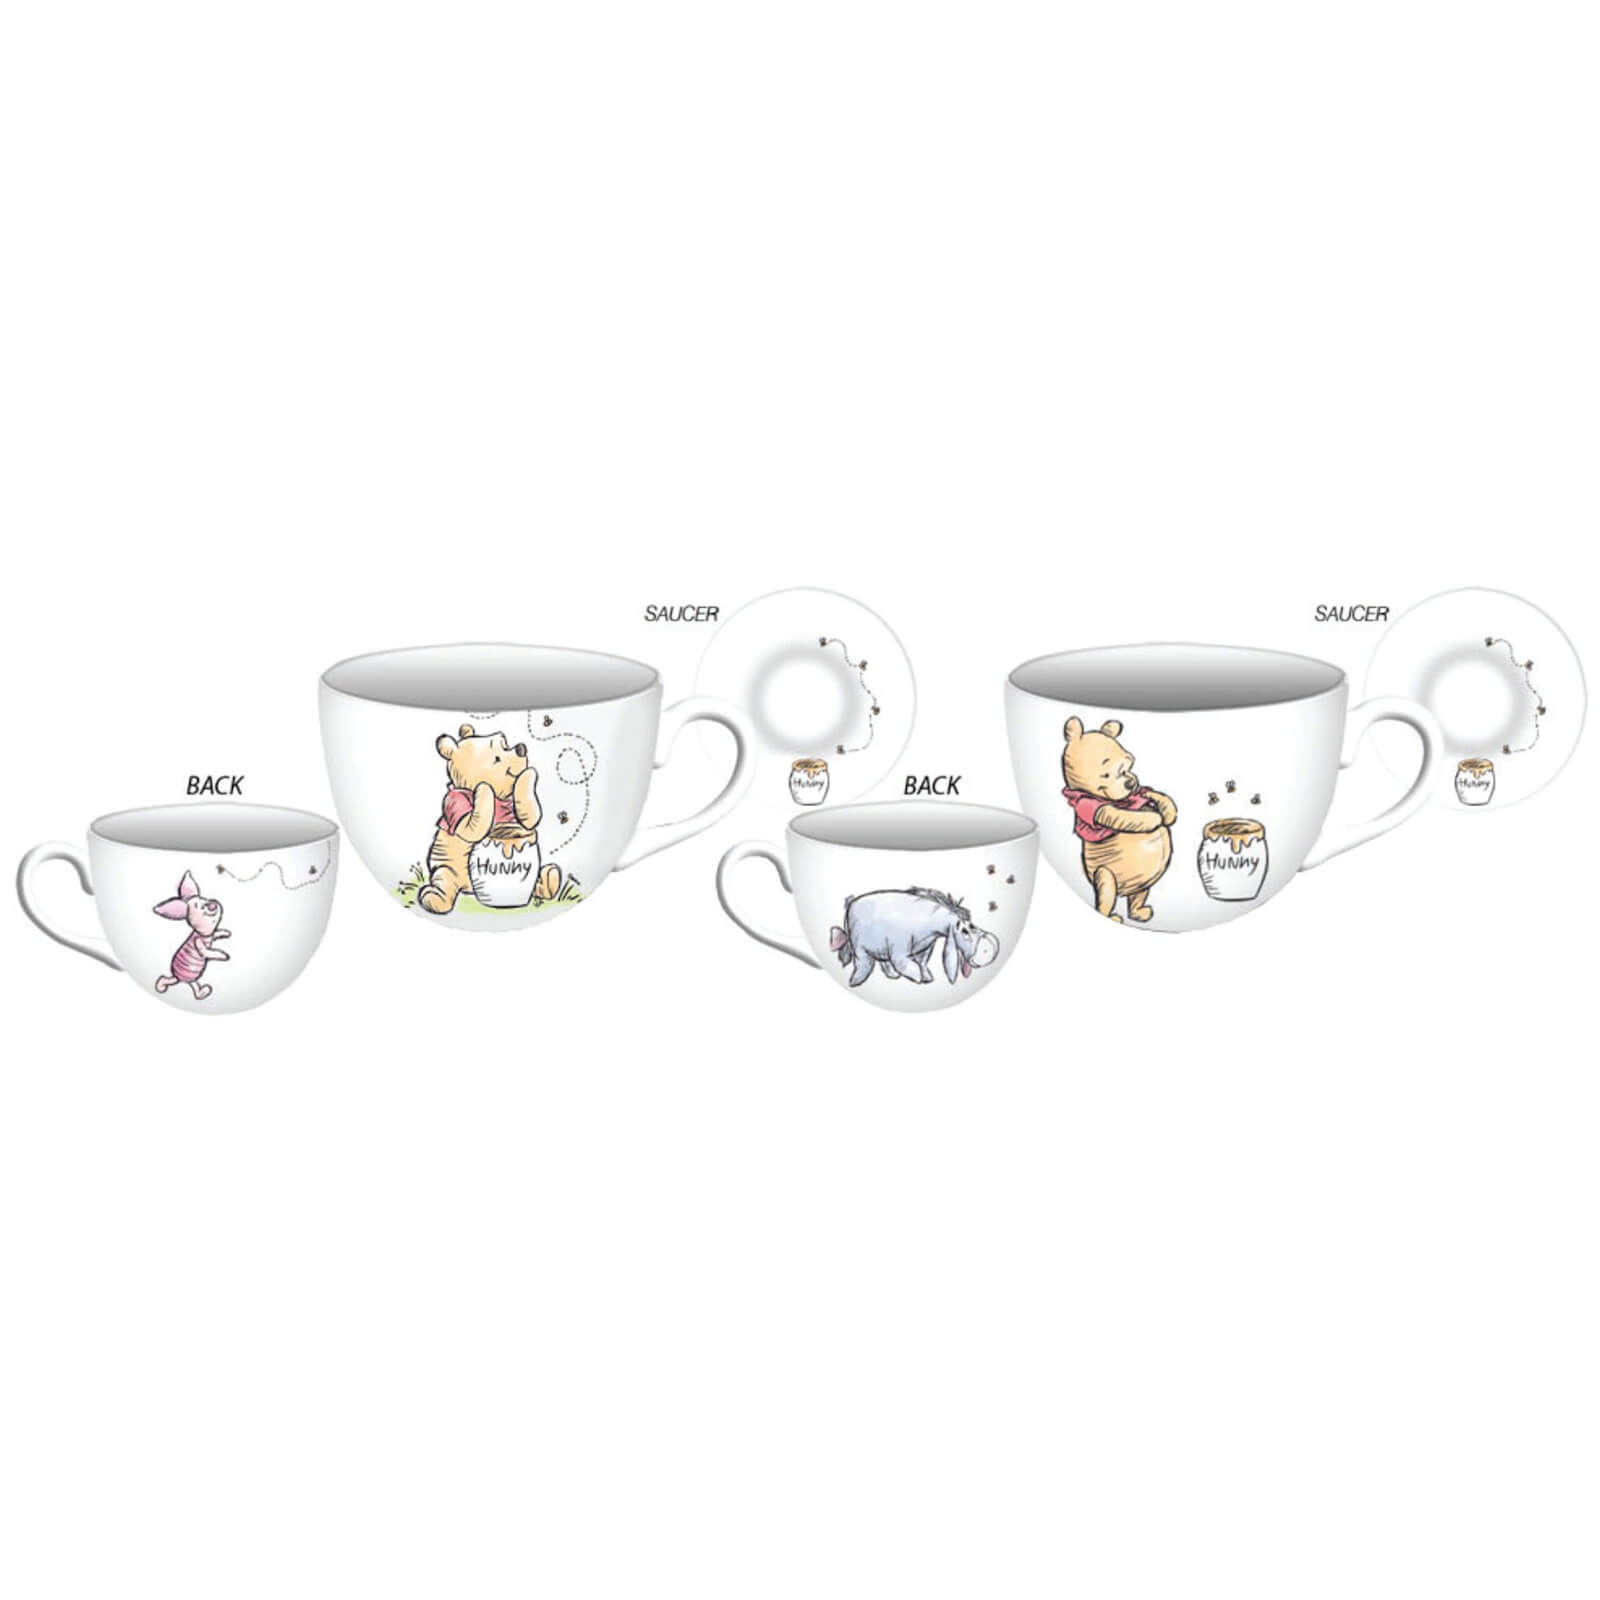 Disney Winnie The Pooh Teacup and Saucer 4 Piece Bone China Set